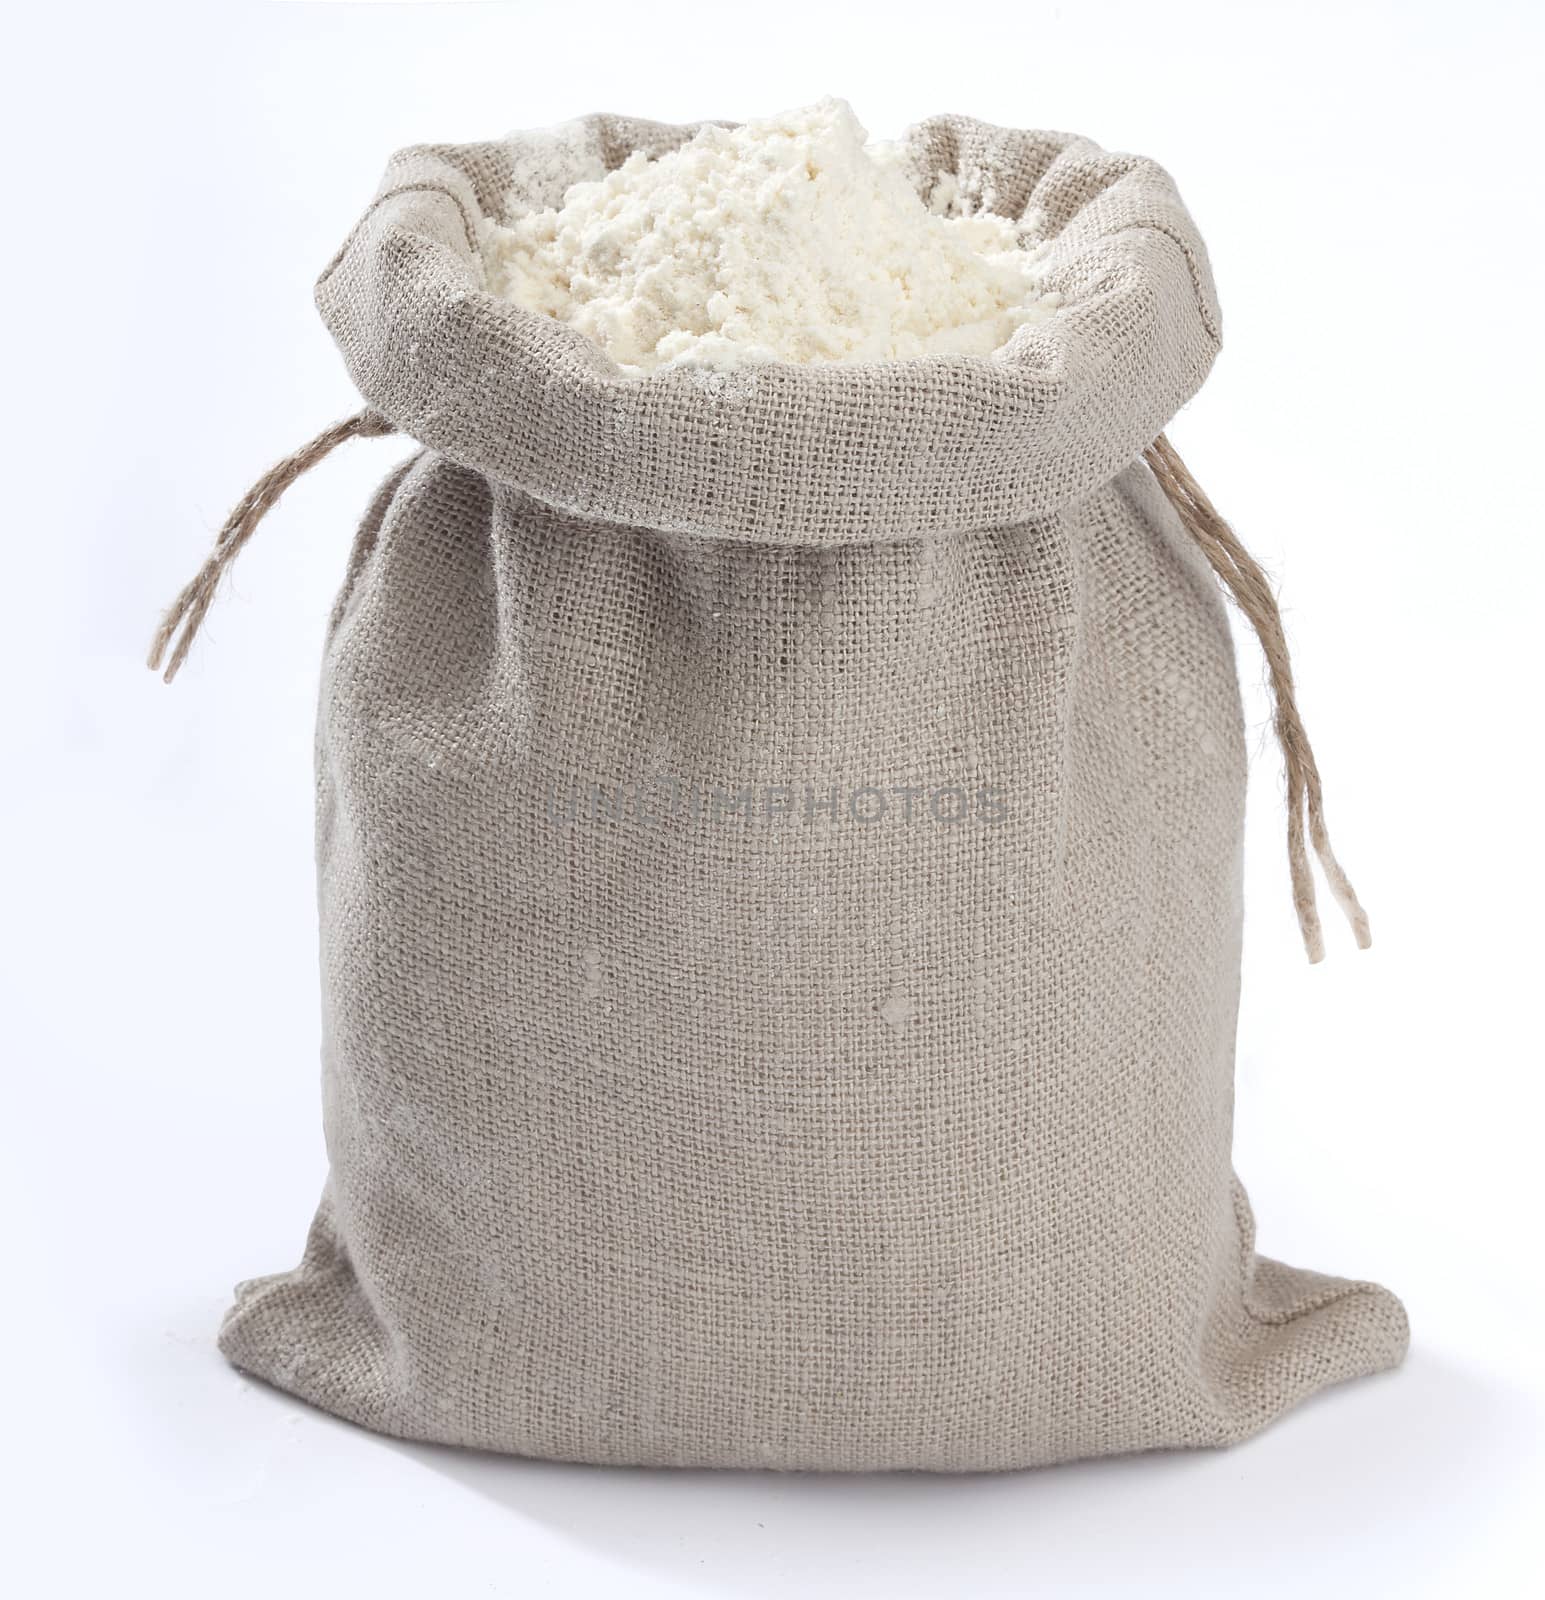 Sacking with flour by Angorius